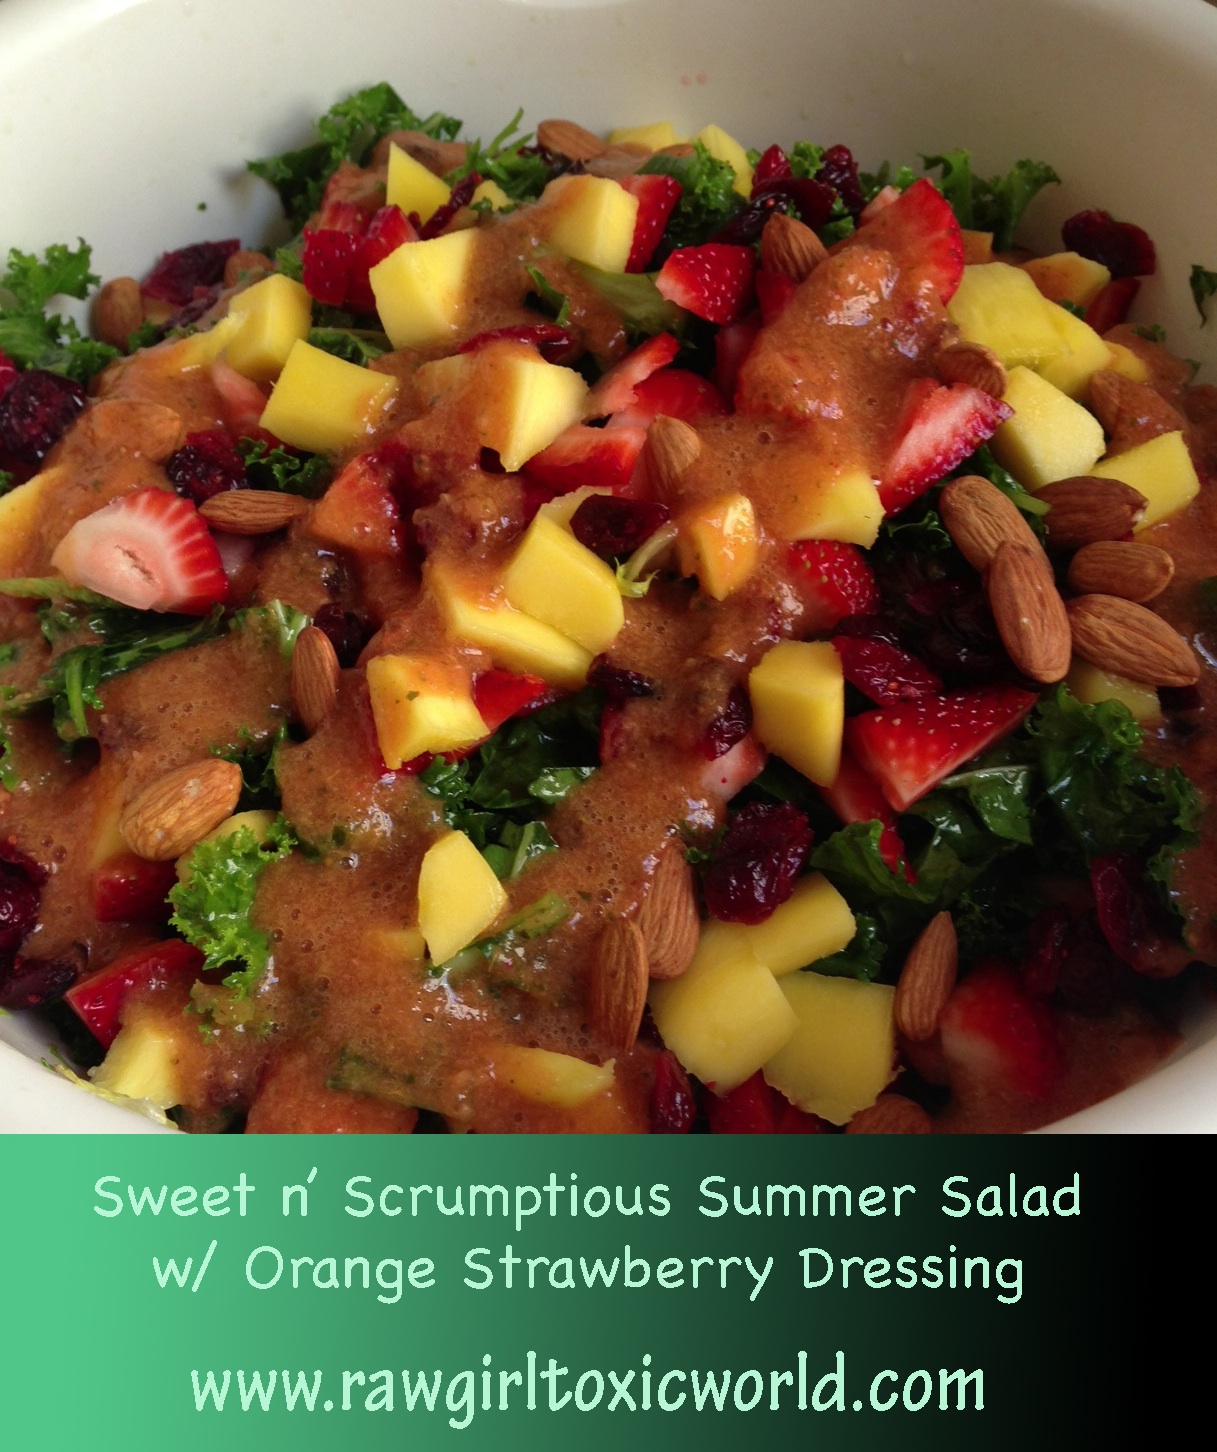 Sweet n' Scrumptious Summer Salad w/ Orange Strawberry Dressing